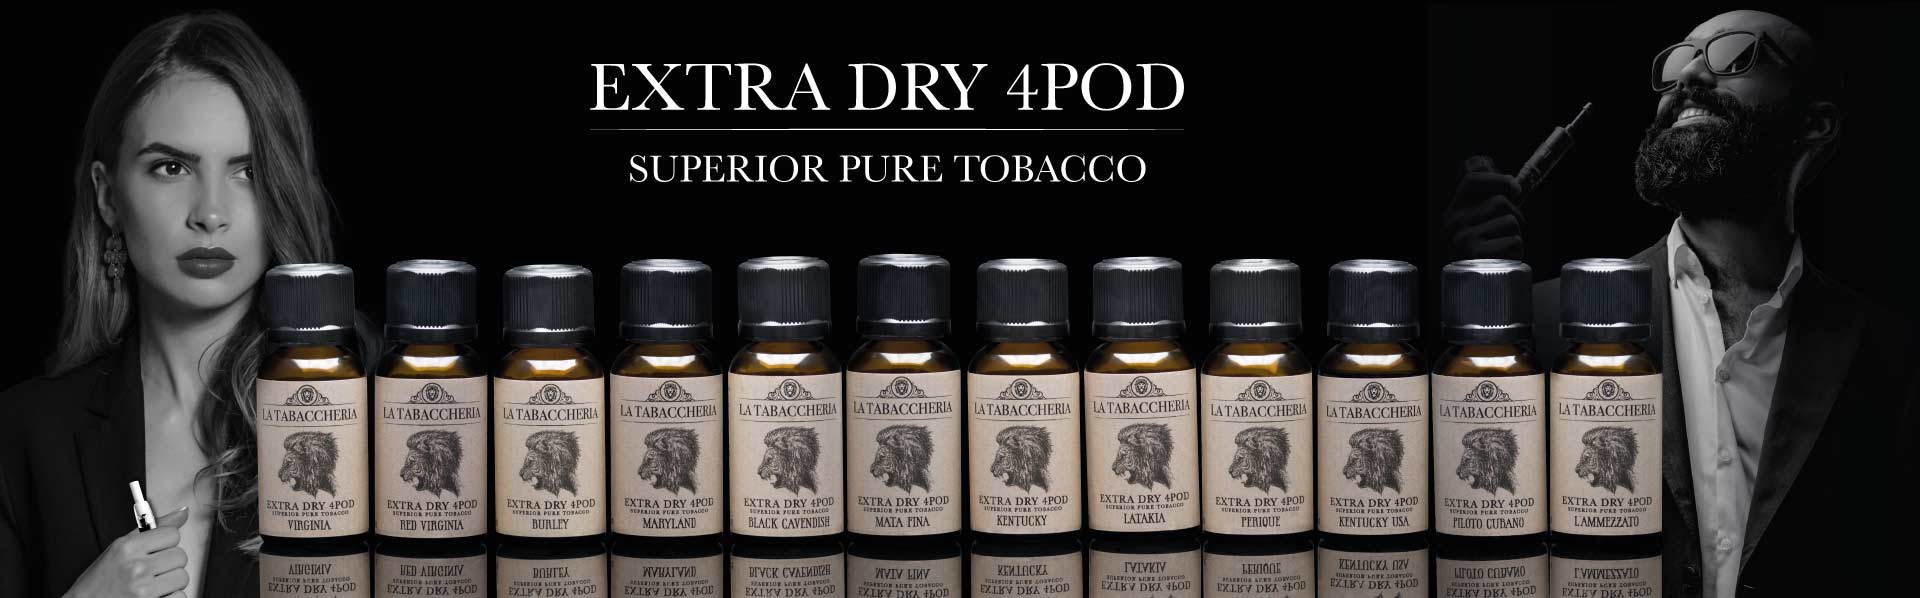 La Tabaccheria Extra Dry 4POD aroma 20ml Superior Pure Tobacco la tabaccheria extra dry 4pod aroma 20ml La Tabaccheria Extra Dry 4POD aroma 20ml la tabaccheria extra dry slide 1 1